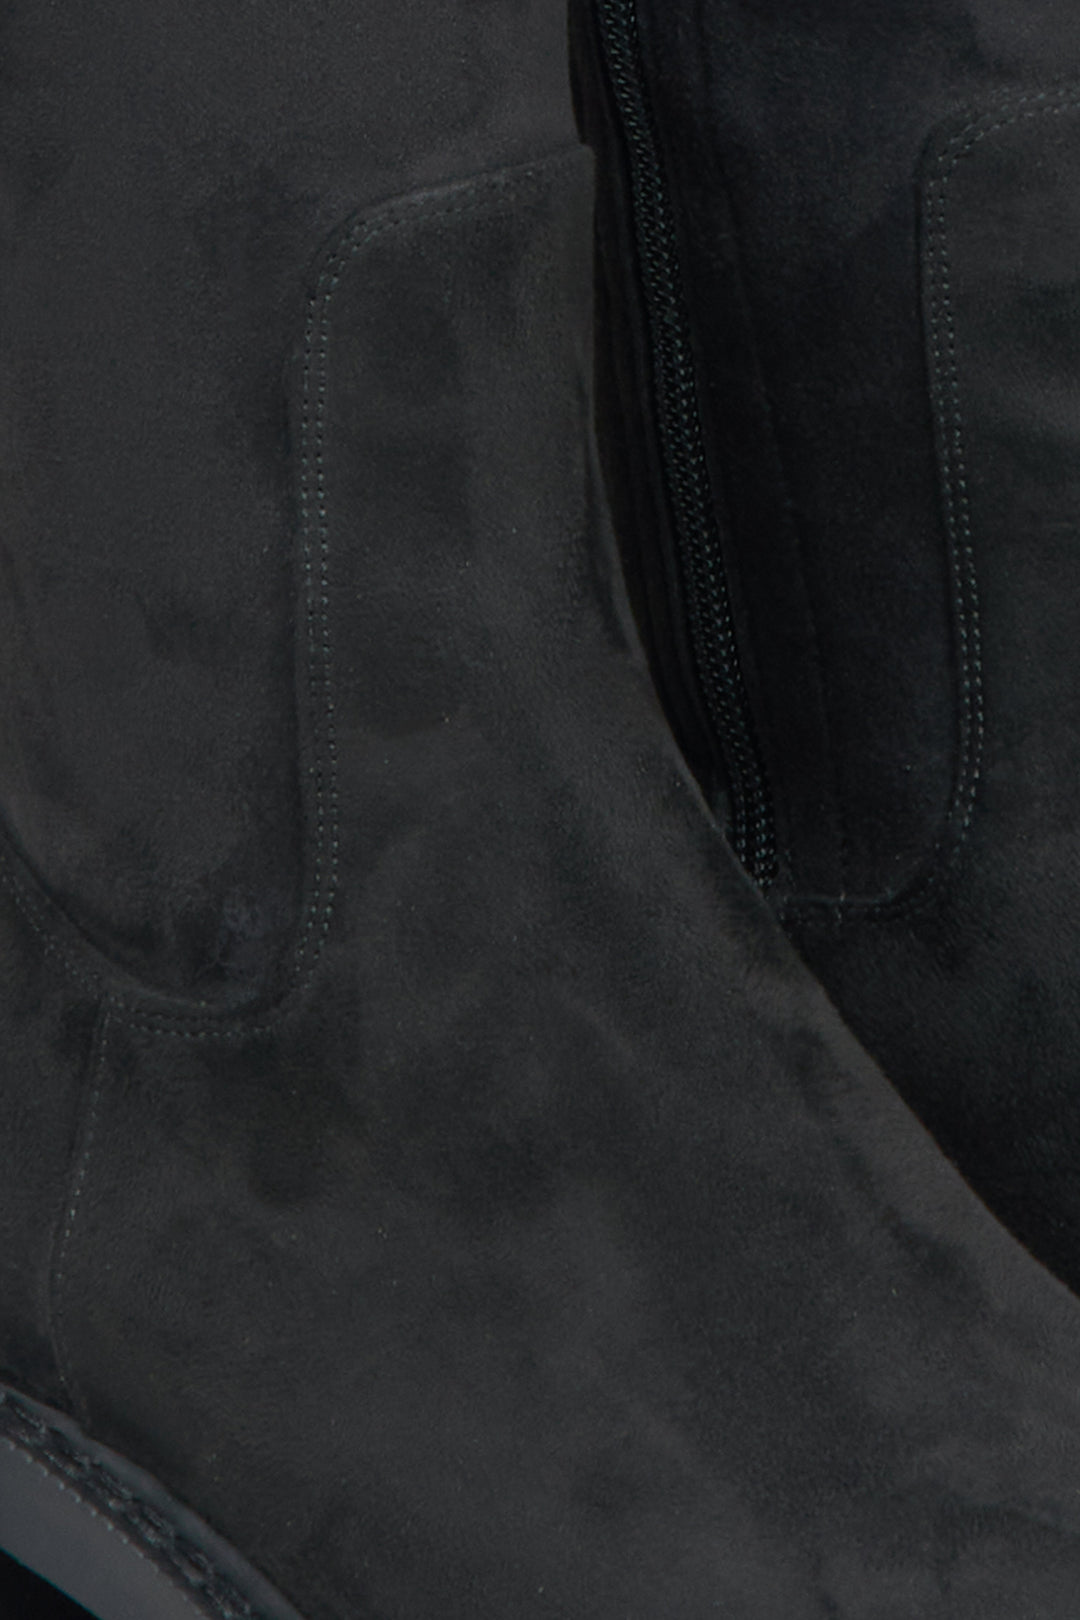 Women's black velour boots by Estro - close-up on the details.